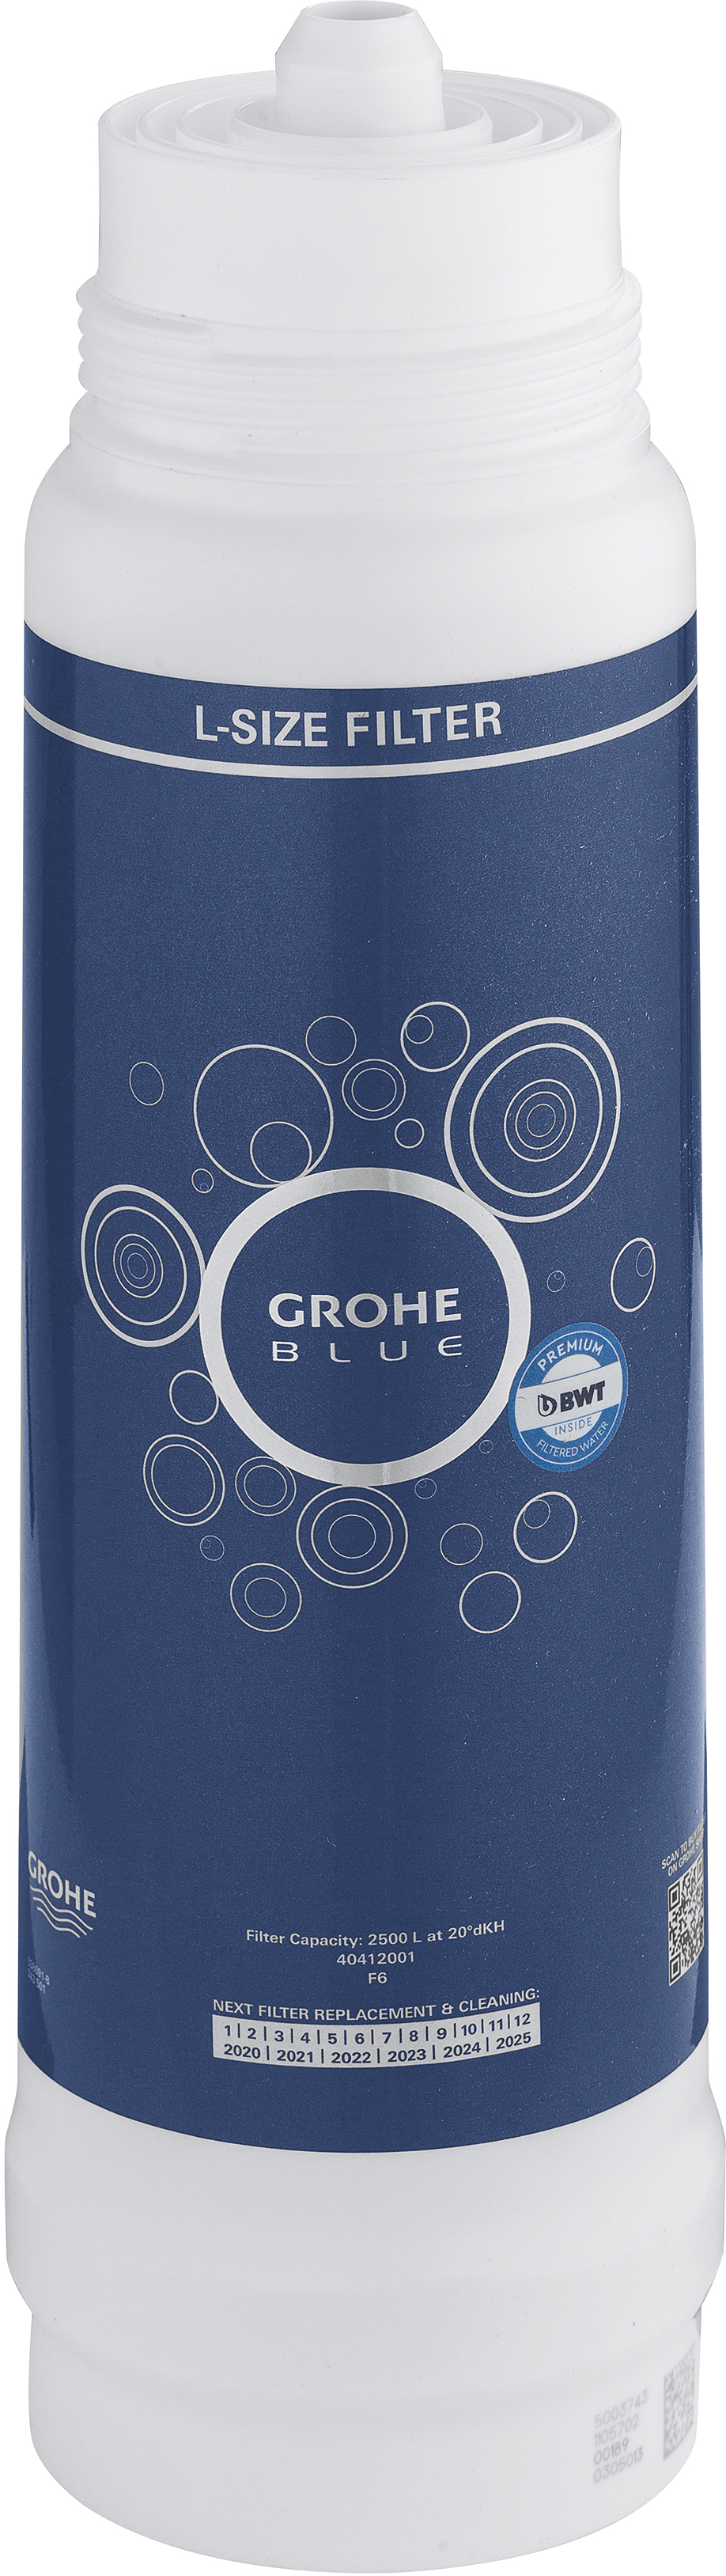 Фильтр Grohe Blue 40412001 L-Size, без насадки - 1